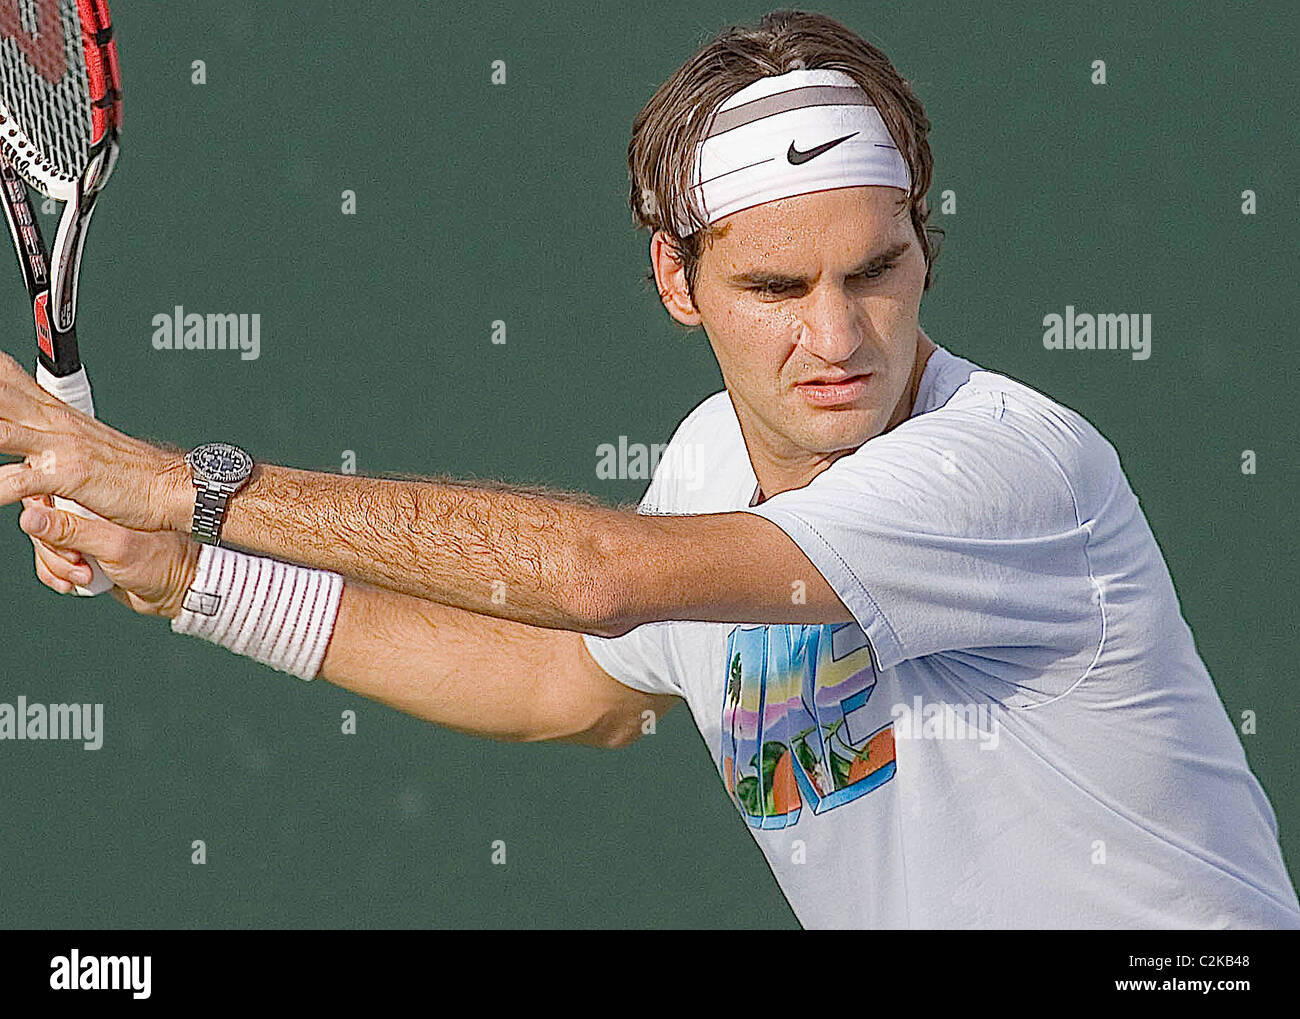 Roger Federer 2008 Pacific Life Open il torneo di tennis di Indian Wells,  California - 12.03.08 Matteo Hynes Foto stock - Alamy